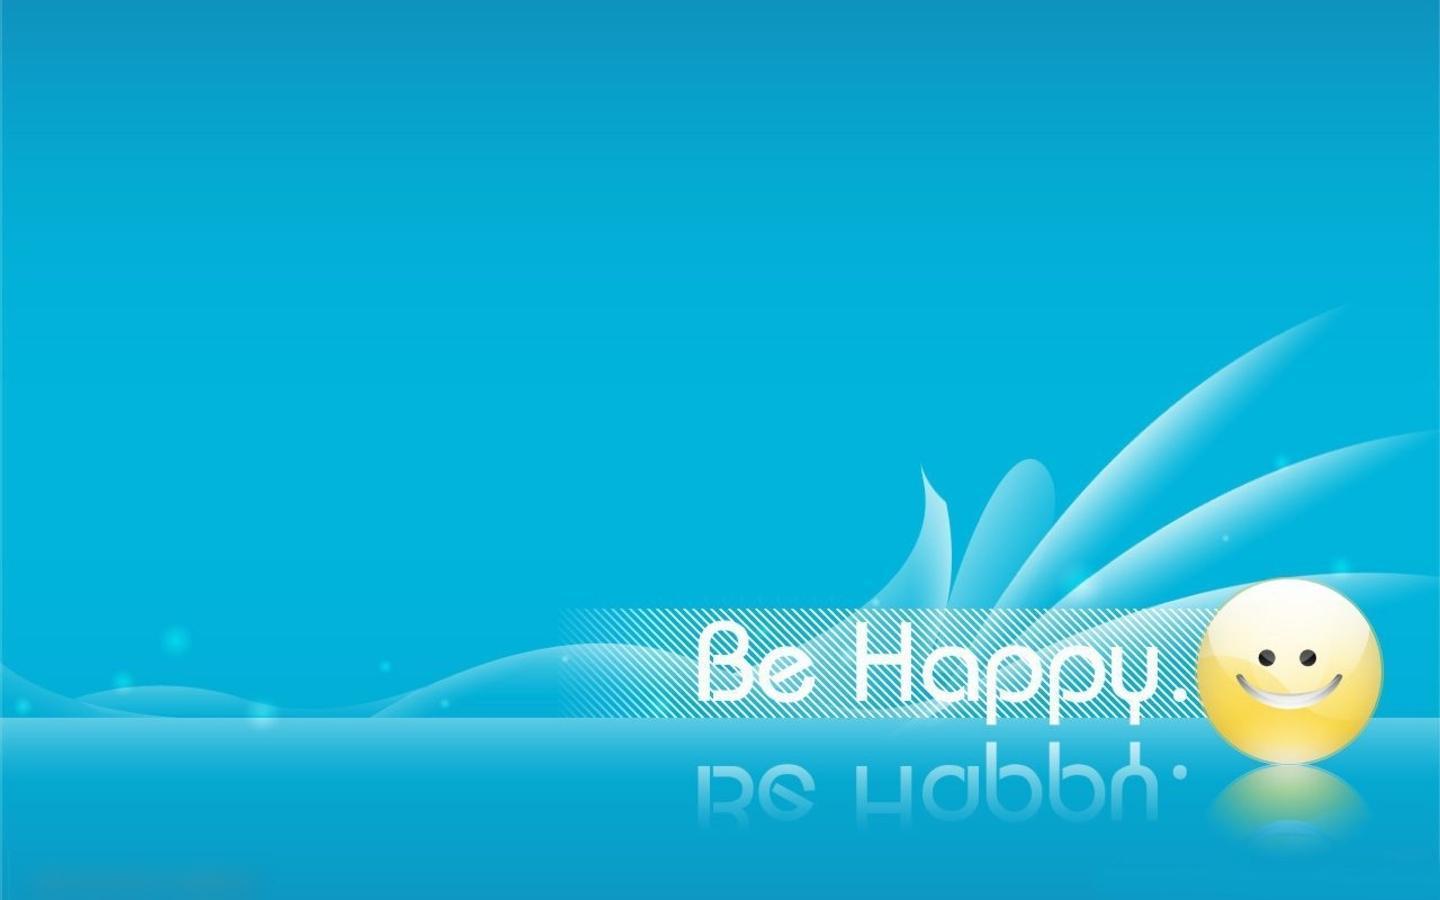 Be happy smile free desktop background wallpaper image